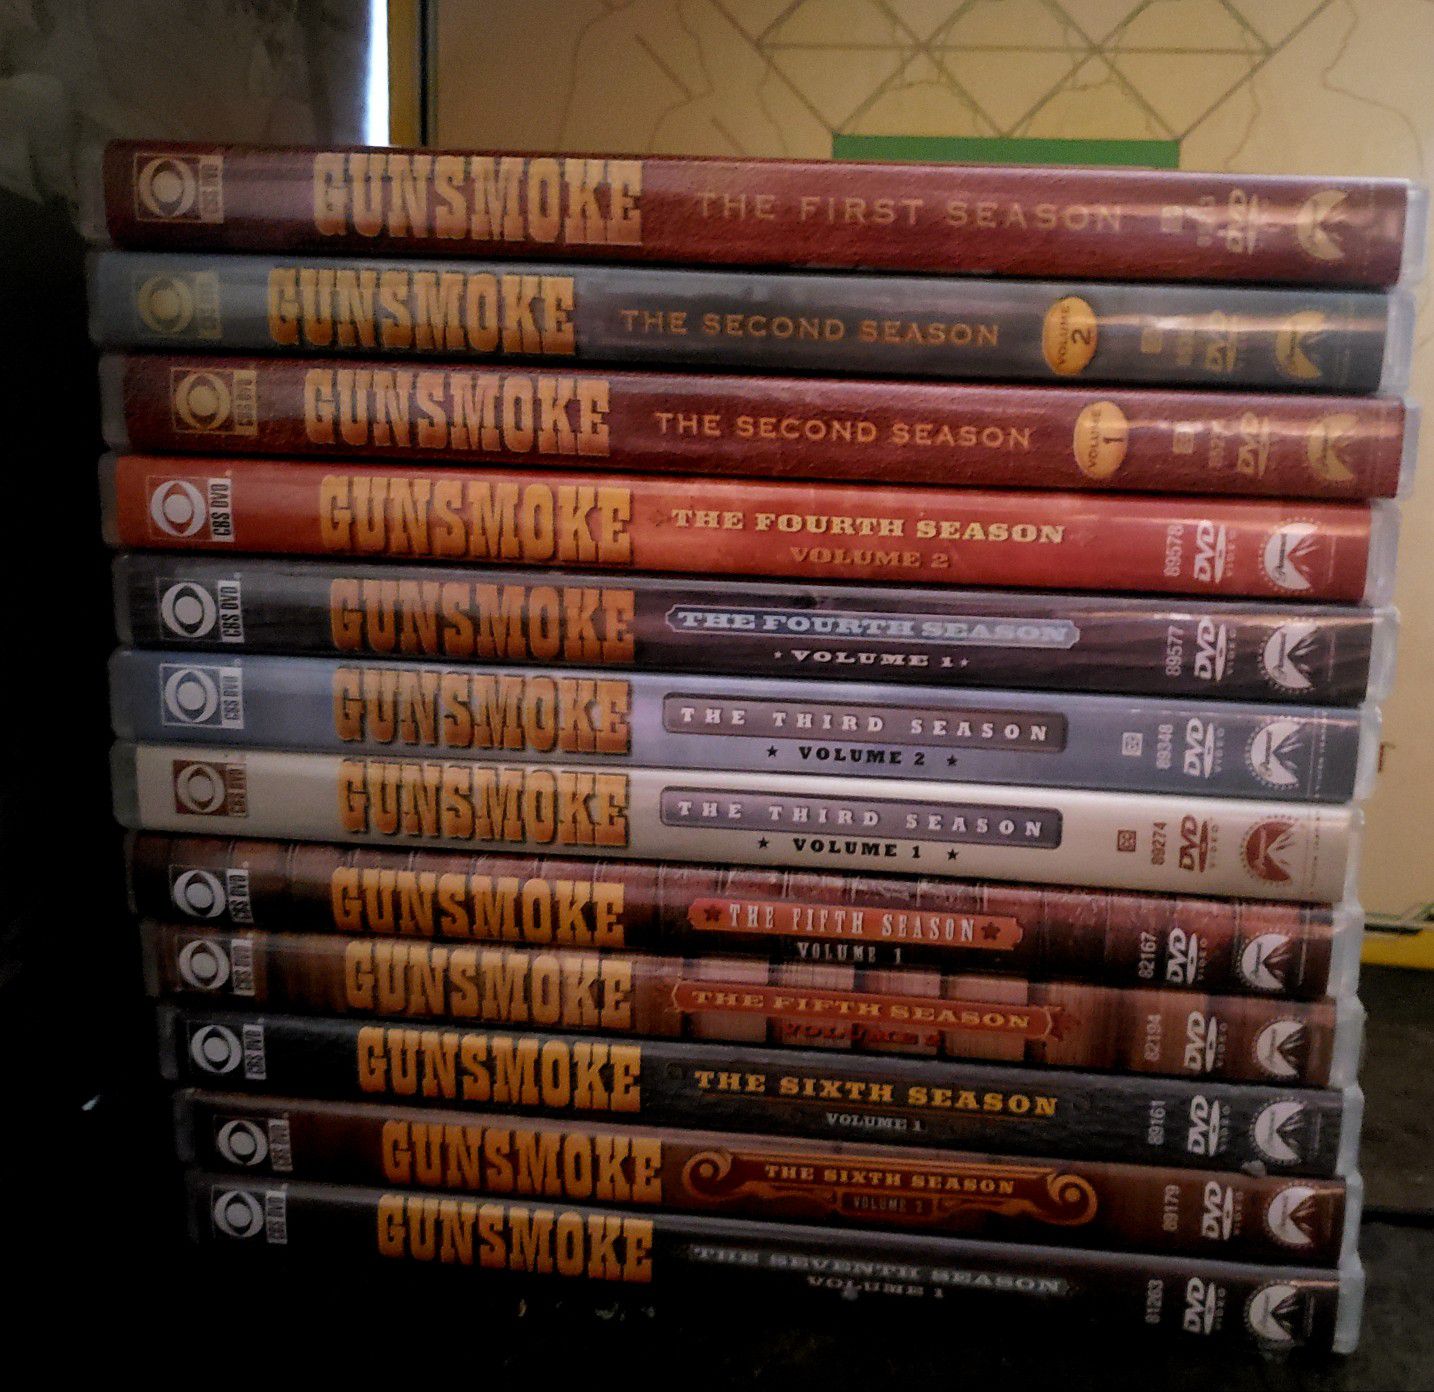 Gunsmoke dvd series, Season 1 through Season 7 (vol. 1) Tarantino's Rick Dalton!